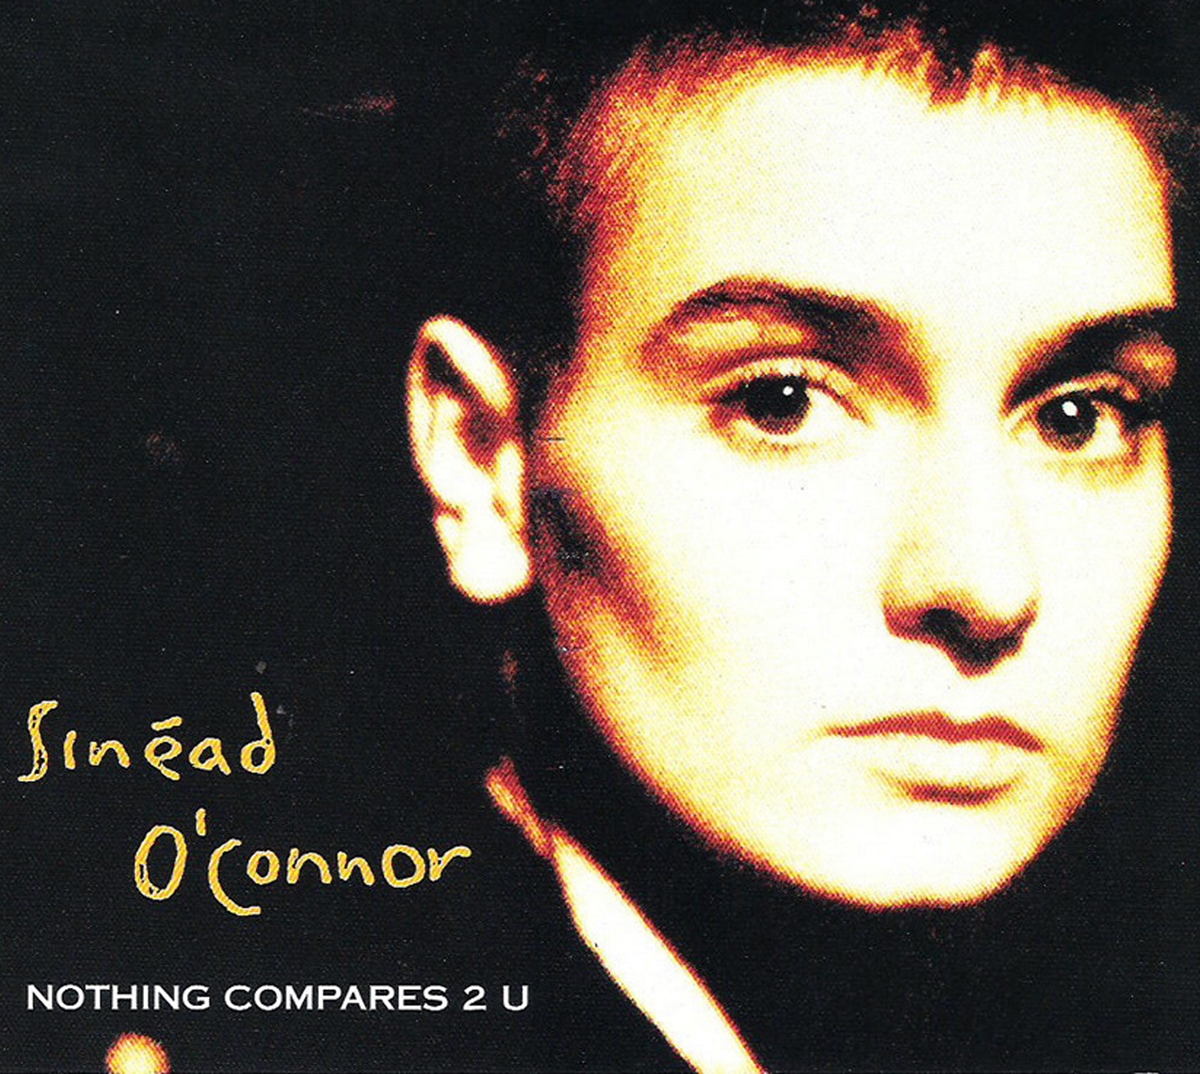 Шинейд о коннор compares 2. Sinéad o'Connor nothing compares 2u. Nothing compares 2 u Шинейд о’Коннор. Sinéad o'Connor 1990. Nothing compares 2 u Шинейд ОКОННОР.